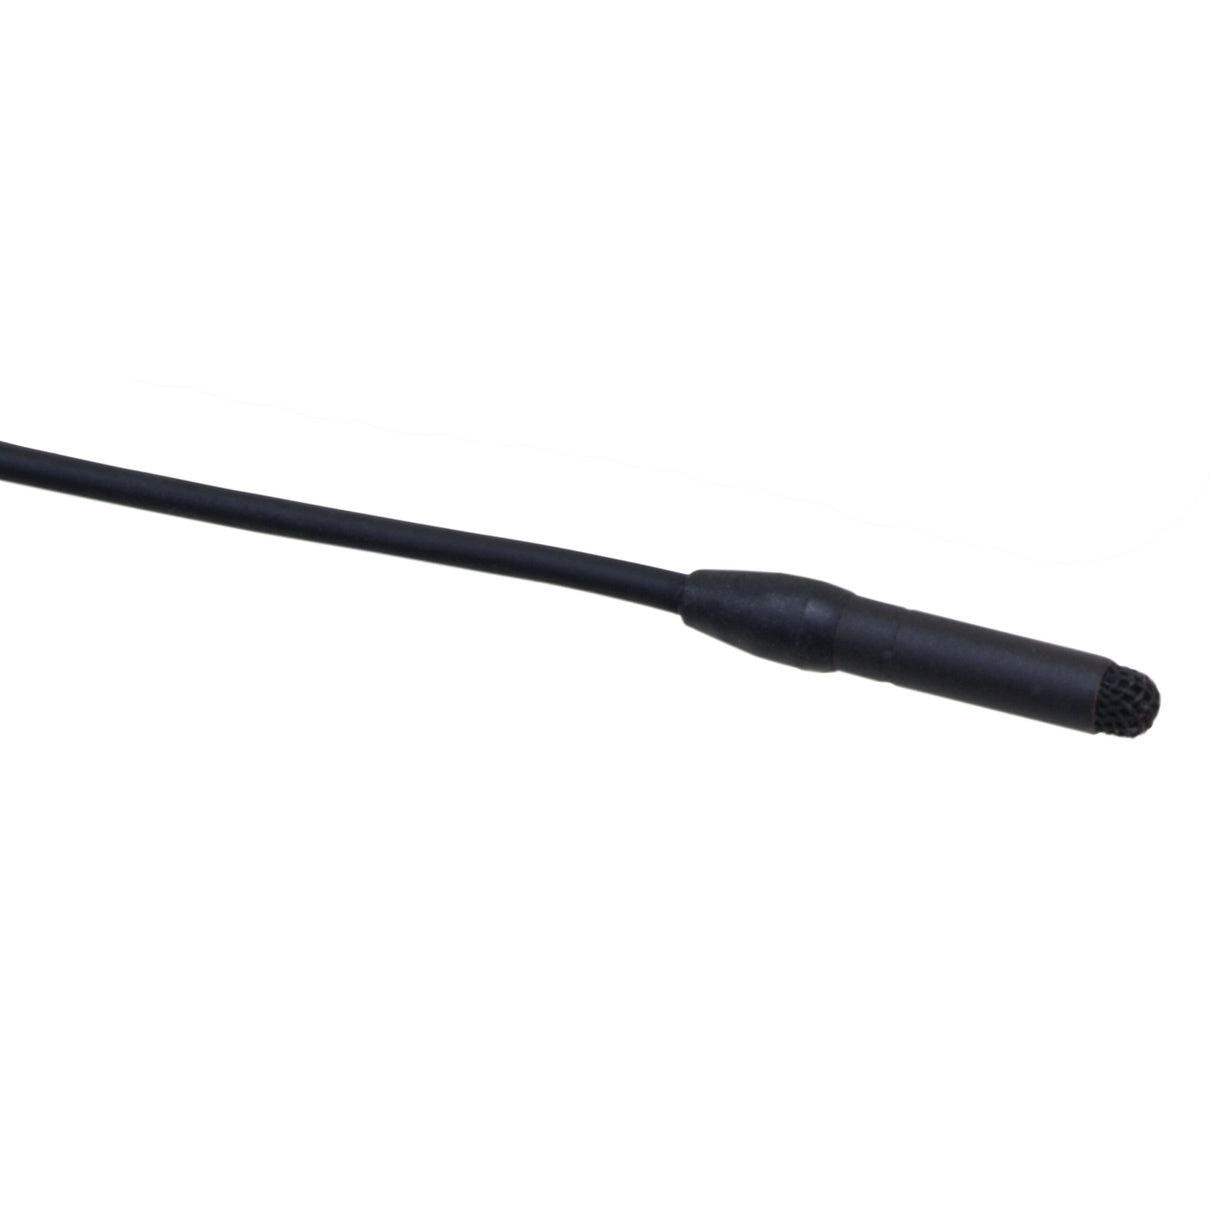 Sanken COS-11D-PT-3.0-BK Omnidirectional Lavalier Microphone, Black, Pigtail, Normal Sensitivity, 3m Stripped Cable